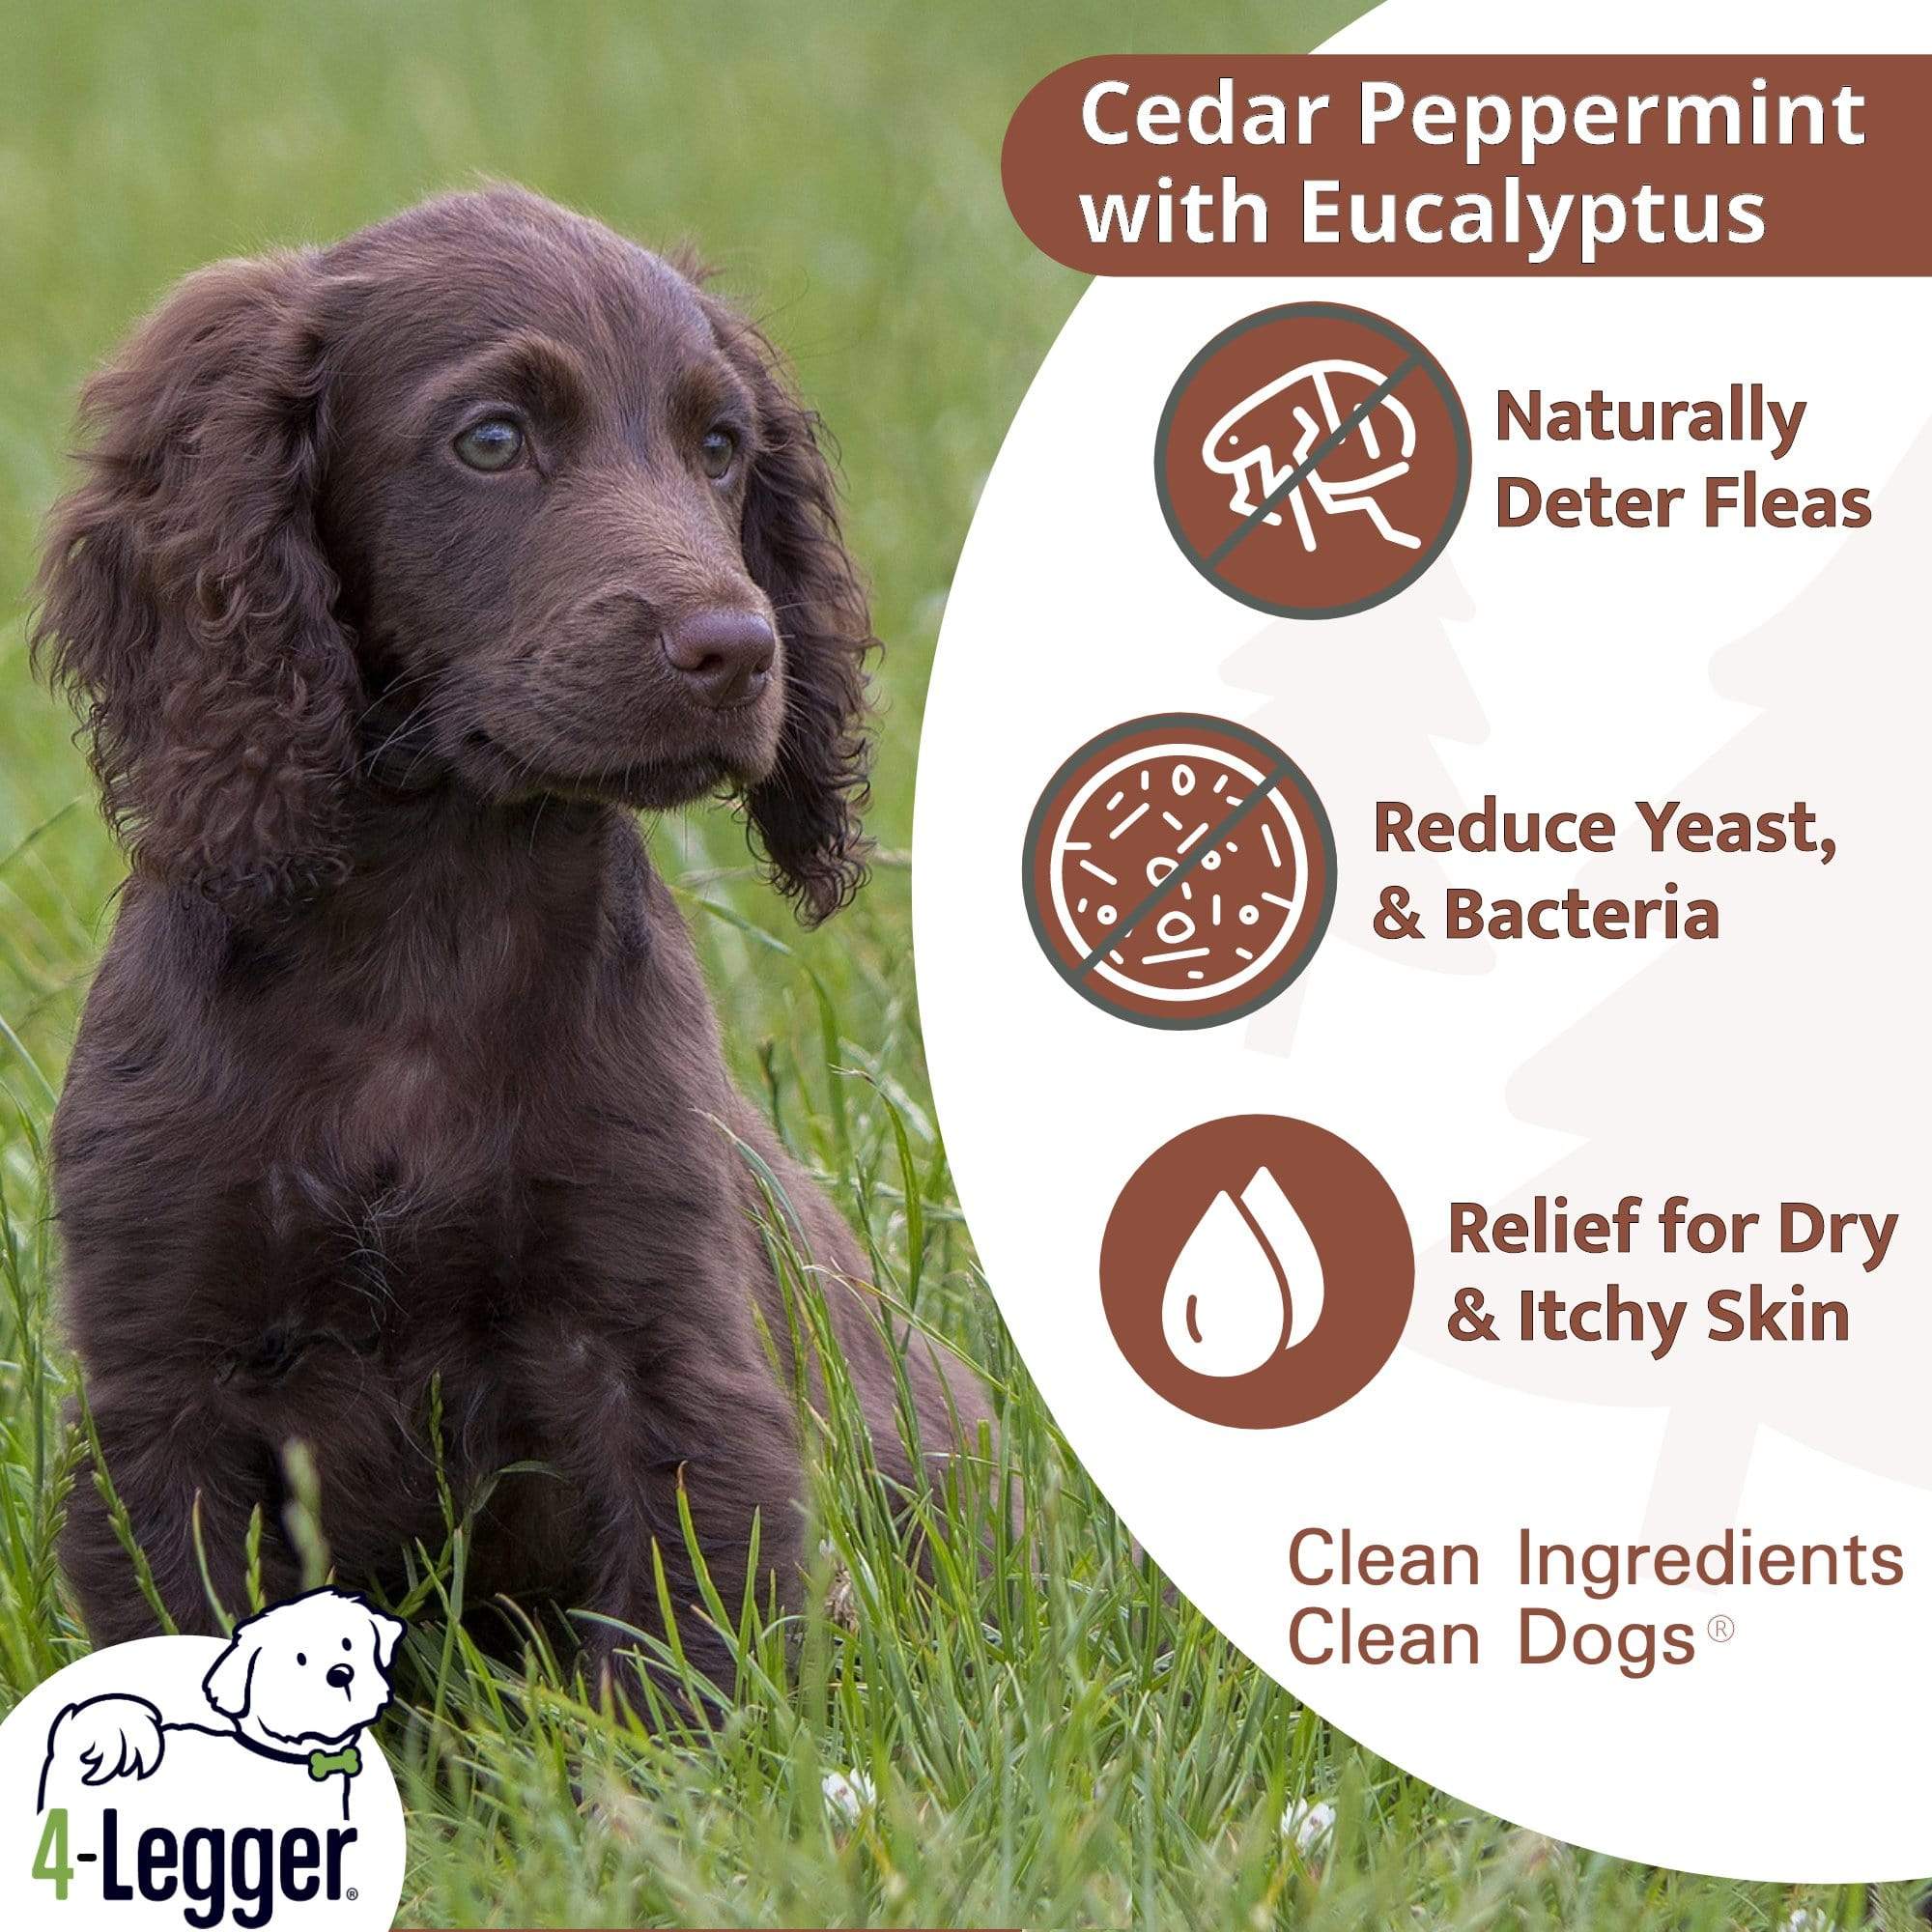 4-Legger Cedar, Peppermint & Eucalyptus Conditioning Dog Shampoo 16oz